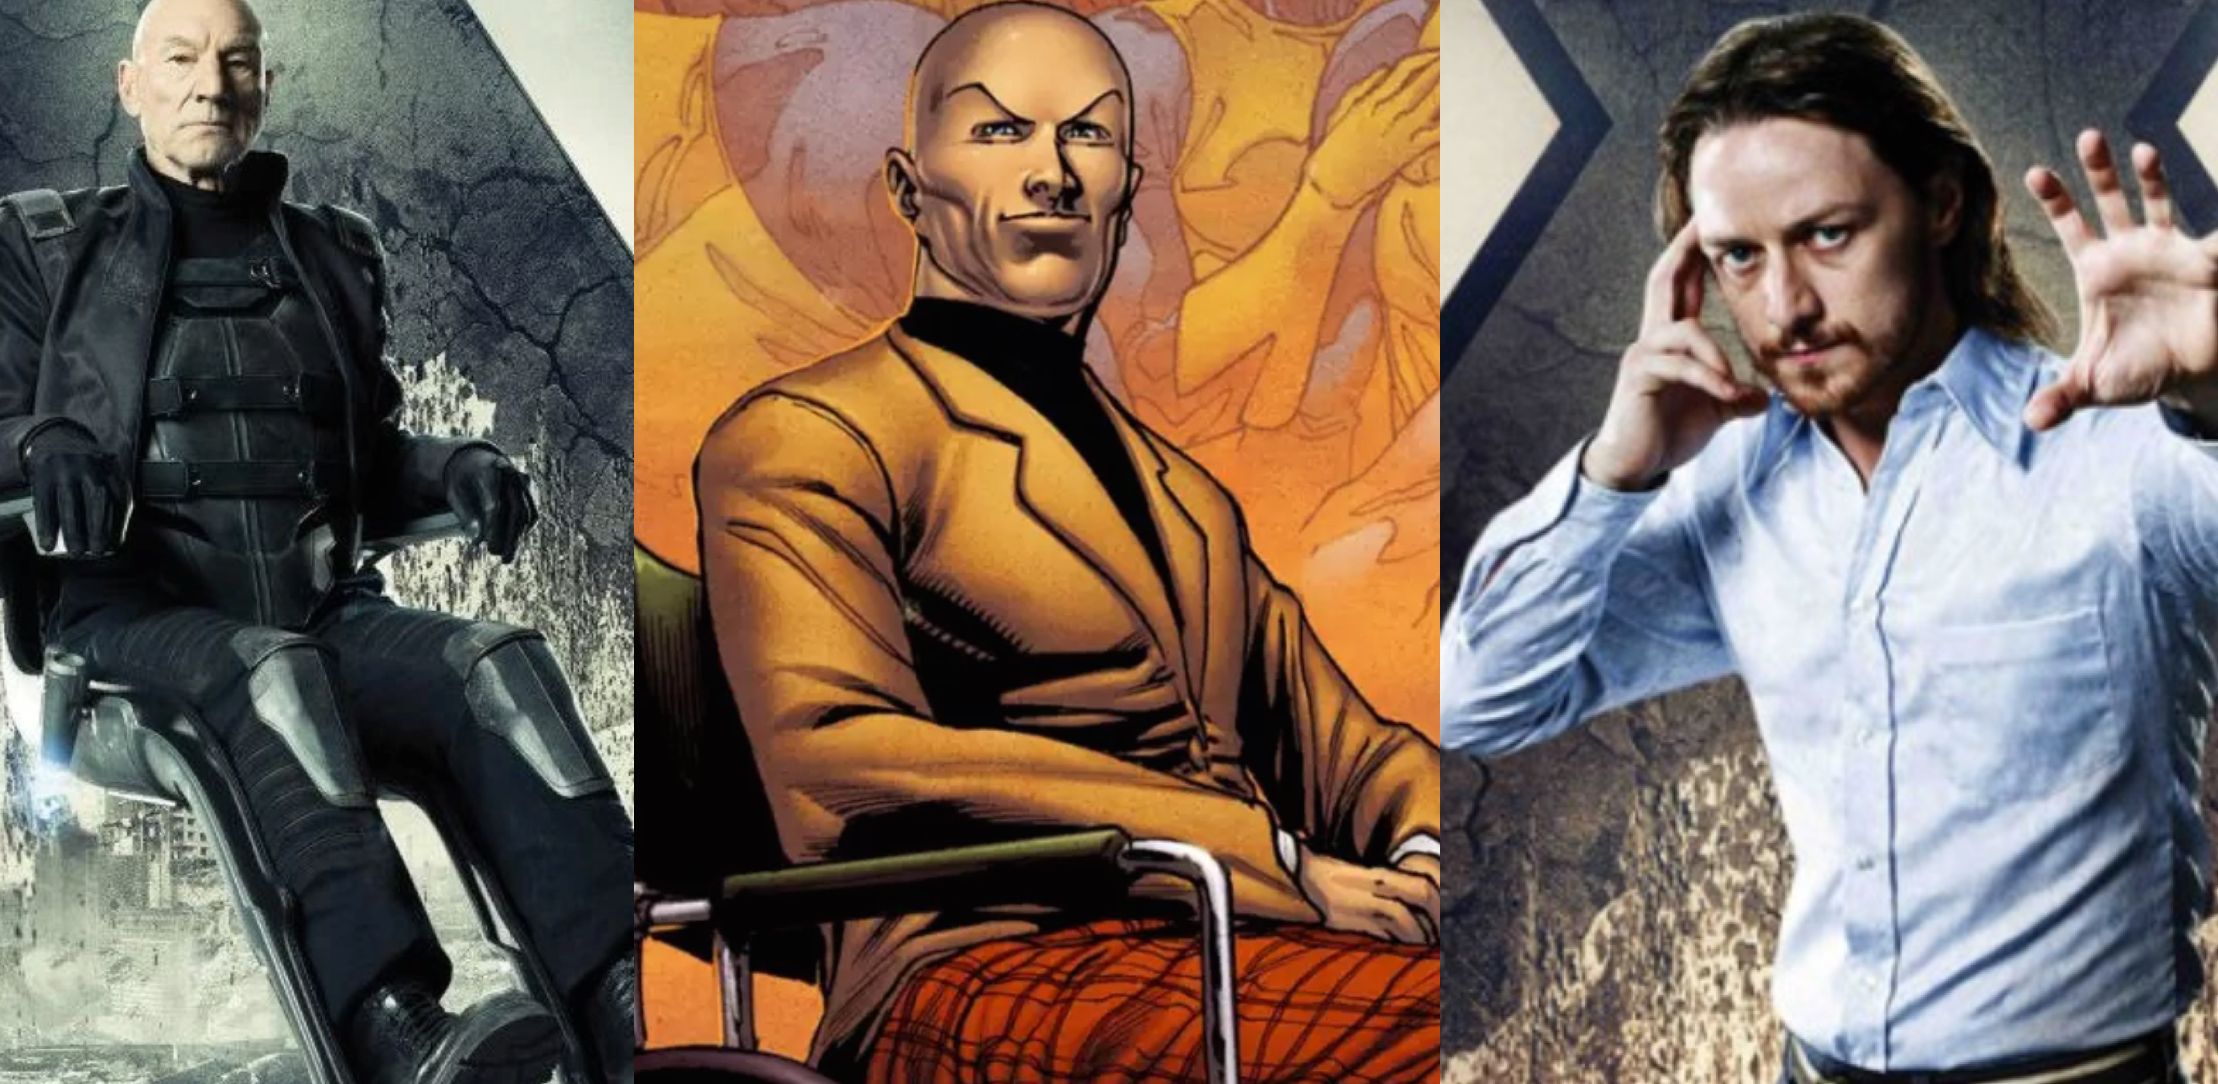 Professor Charles Xavier in X-Men Movies and Comics